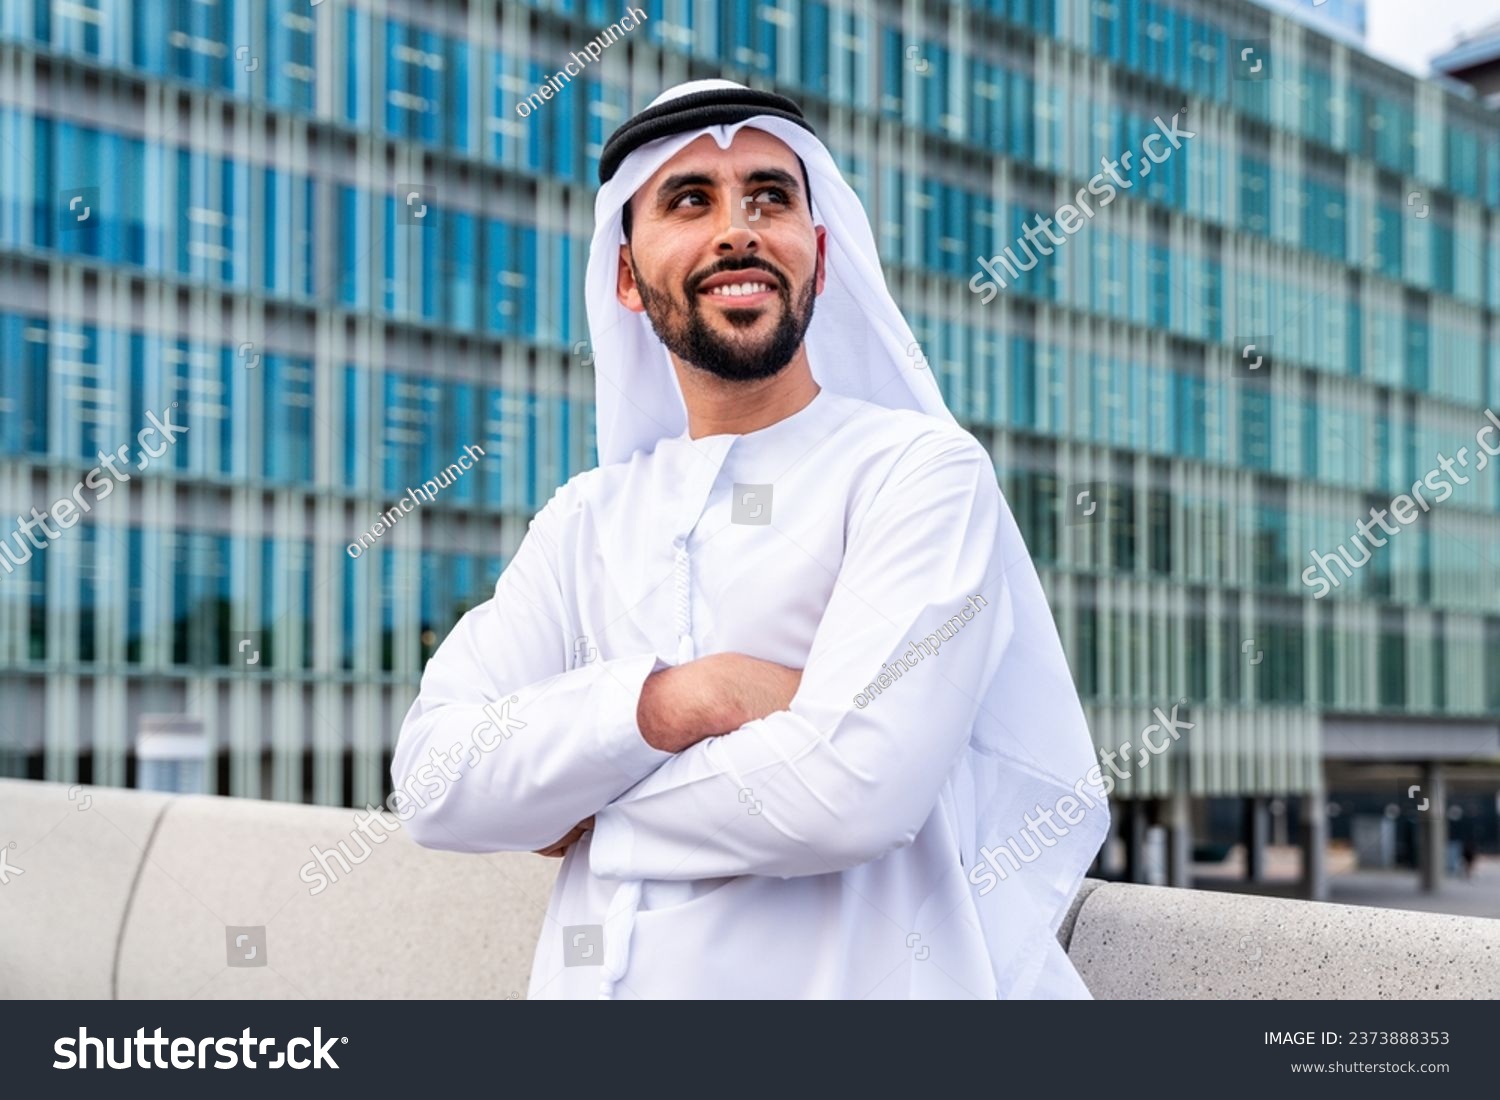 Arab middle-eastern man wearing emirati kandora traditional clothing in the city - Arabian muslim businessman strolling in urban business centre. #2373888353